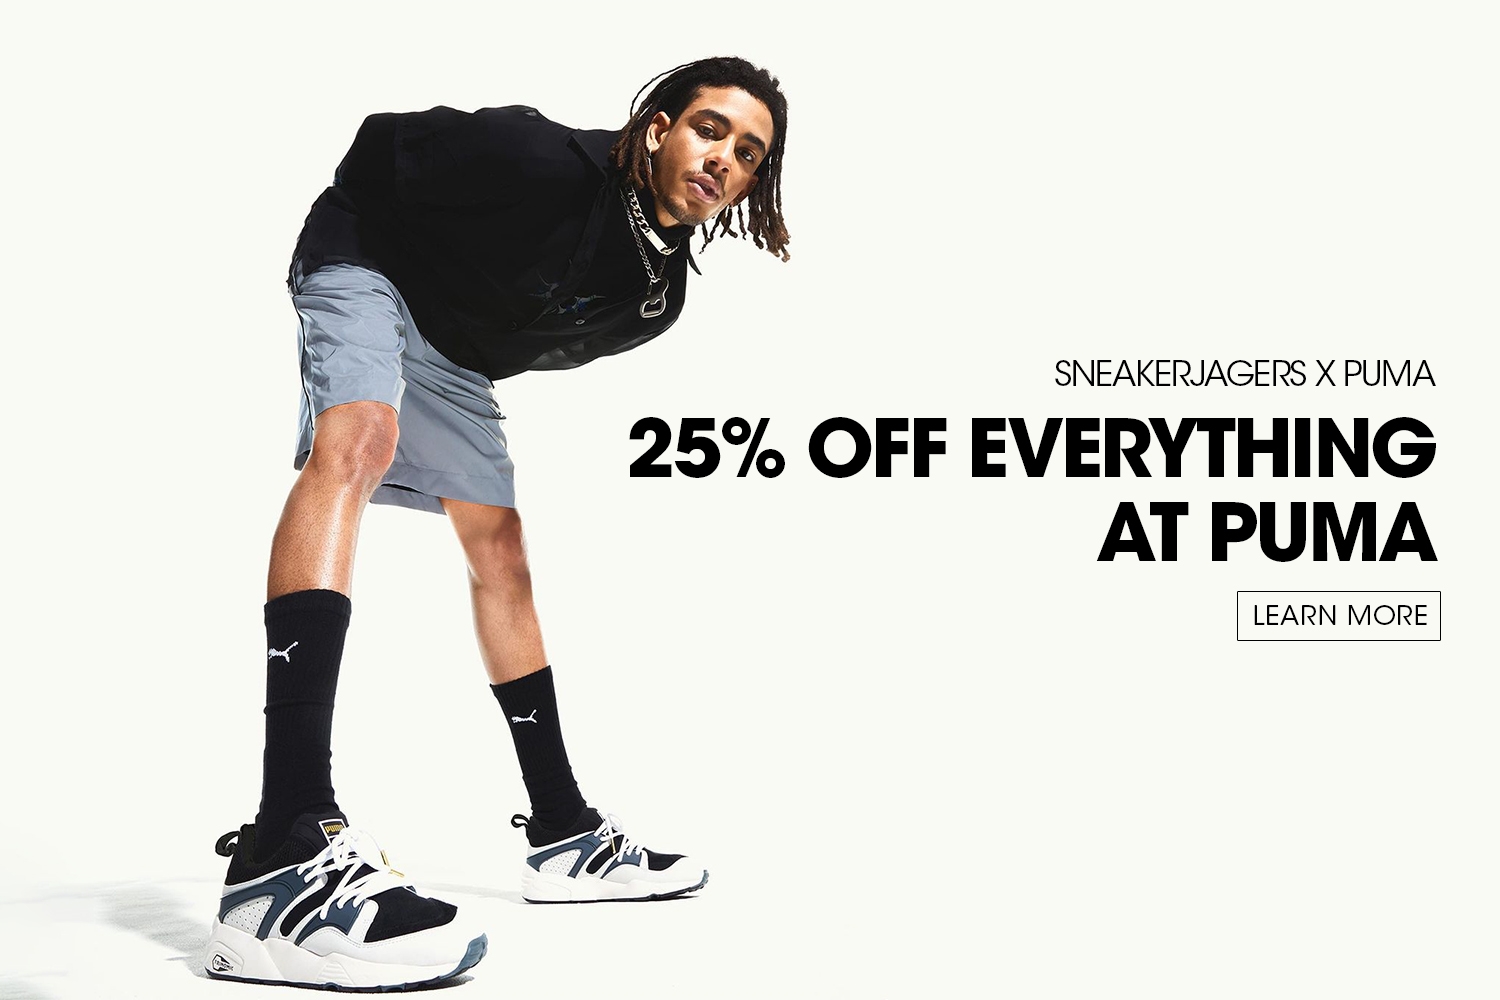 Exklusiver PUMA Rabattcode bei Sneakerjagers